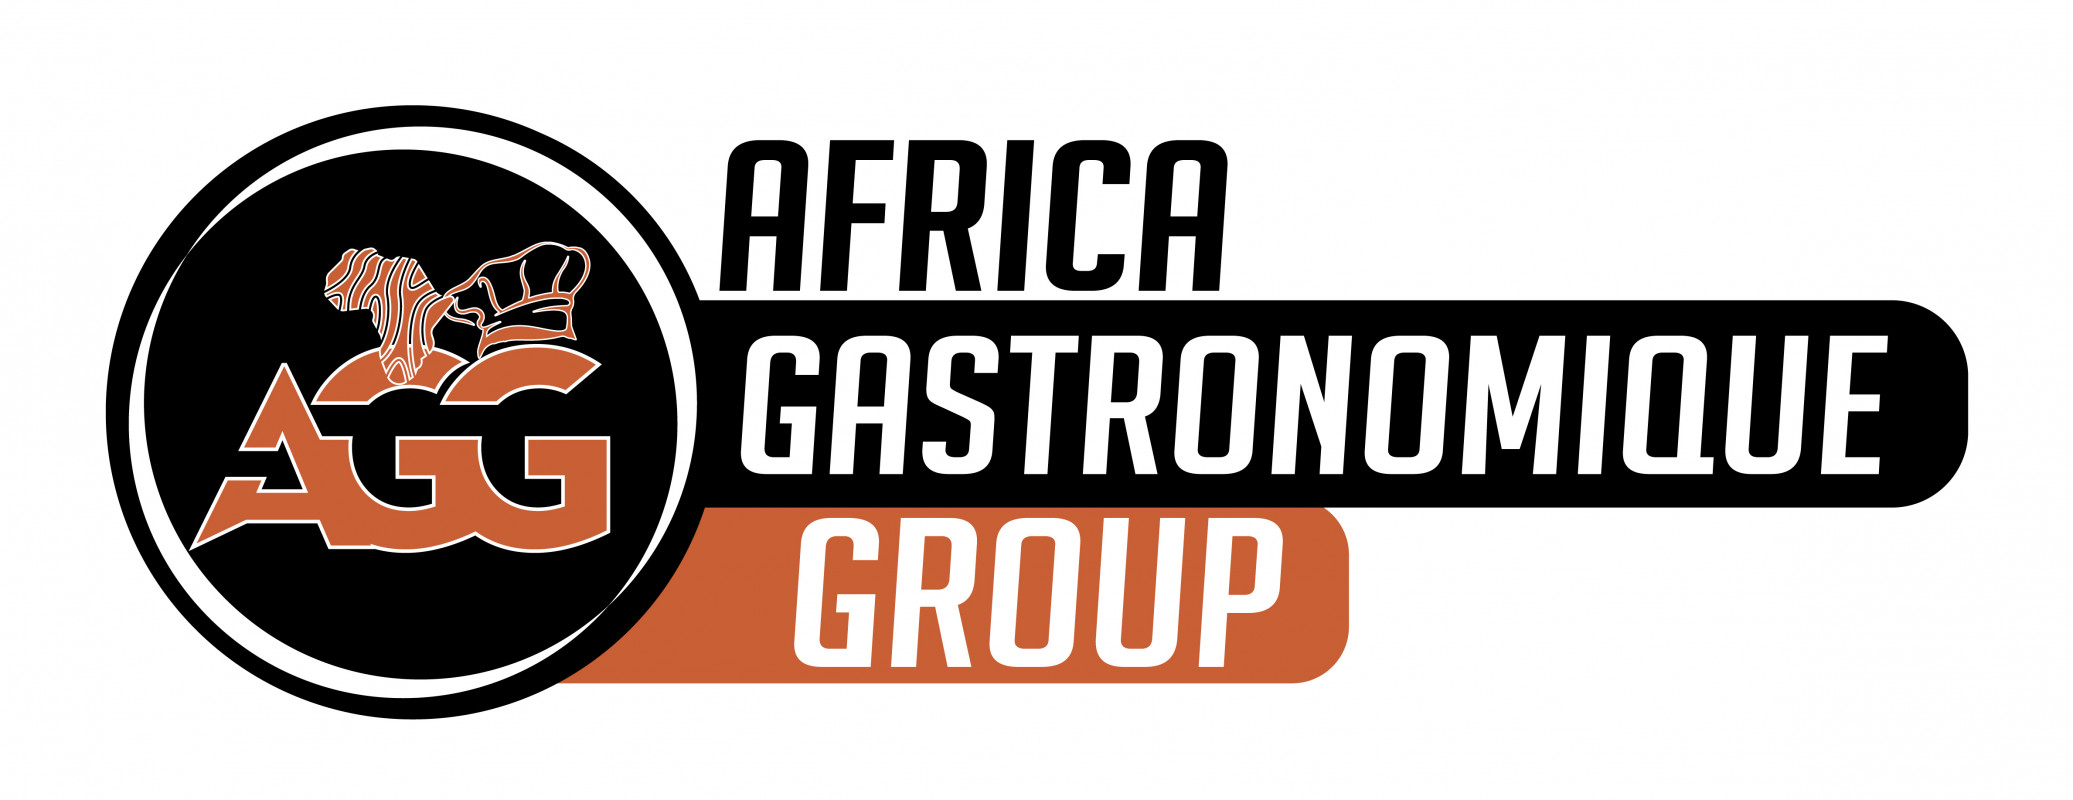 AFRICA GASTRONOMIQUE Company Logo